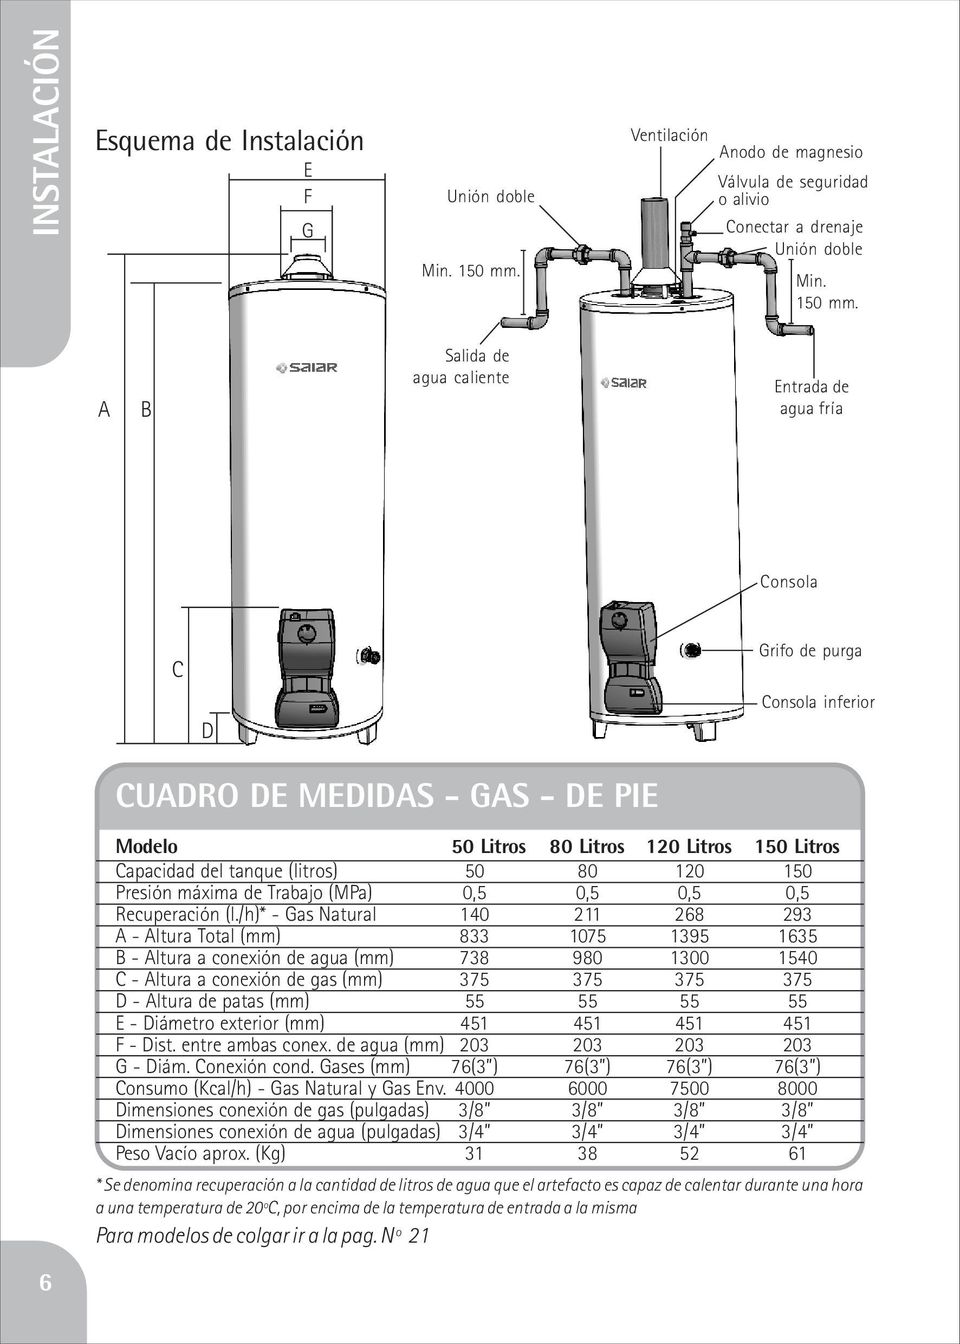 A B Salida de agua caliente Entrada de agua fría Consola C D Grifo de purga Consola inferior CUADRO DE MEDIDAS - GAS - DE PIE Modelo Capacidad del tanque (litros) Presión máxima de Trabajo (MPa)